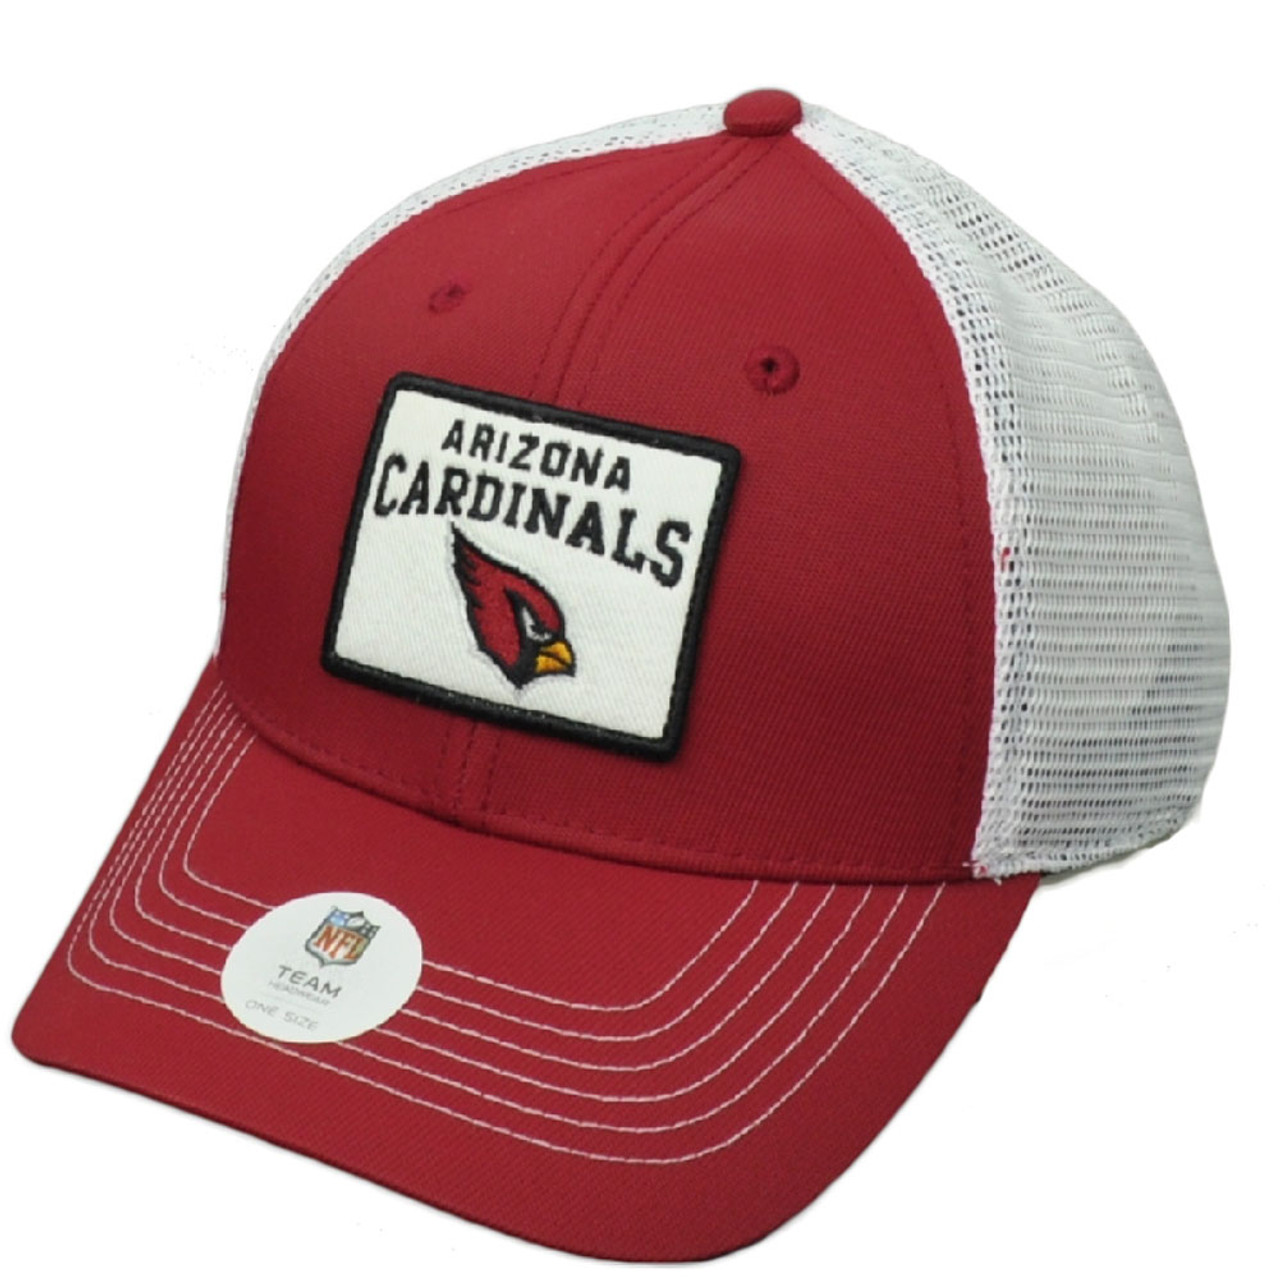 nfl arizona cardinals hat